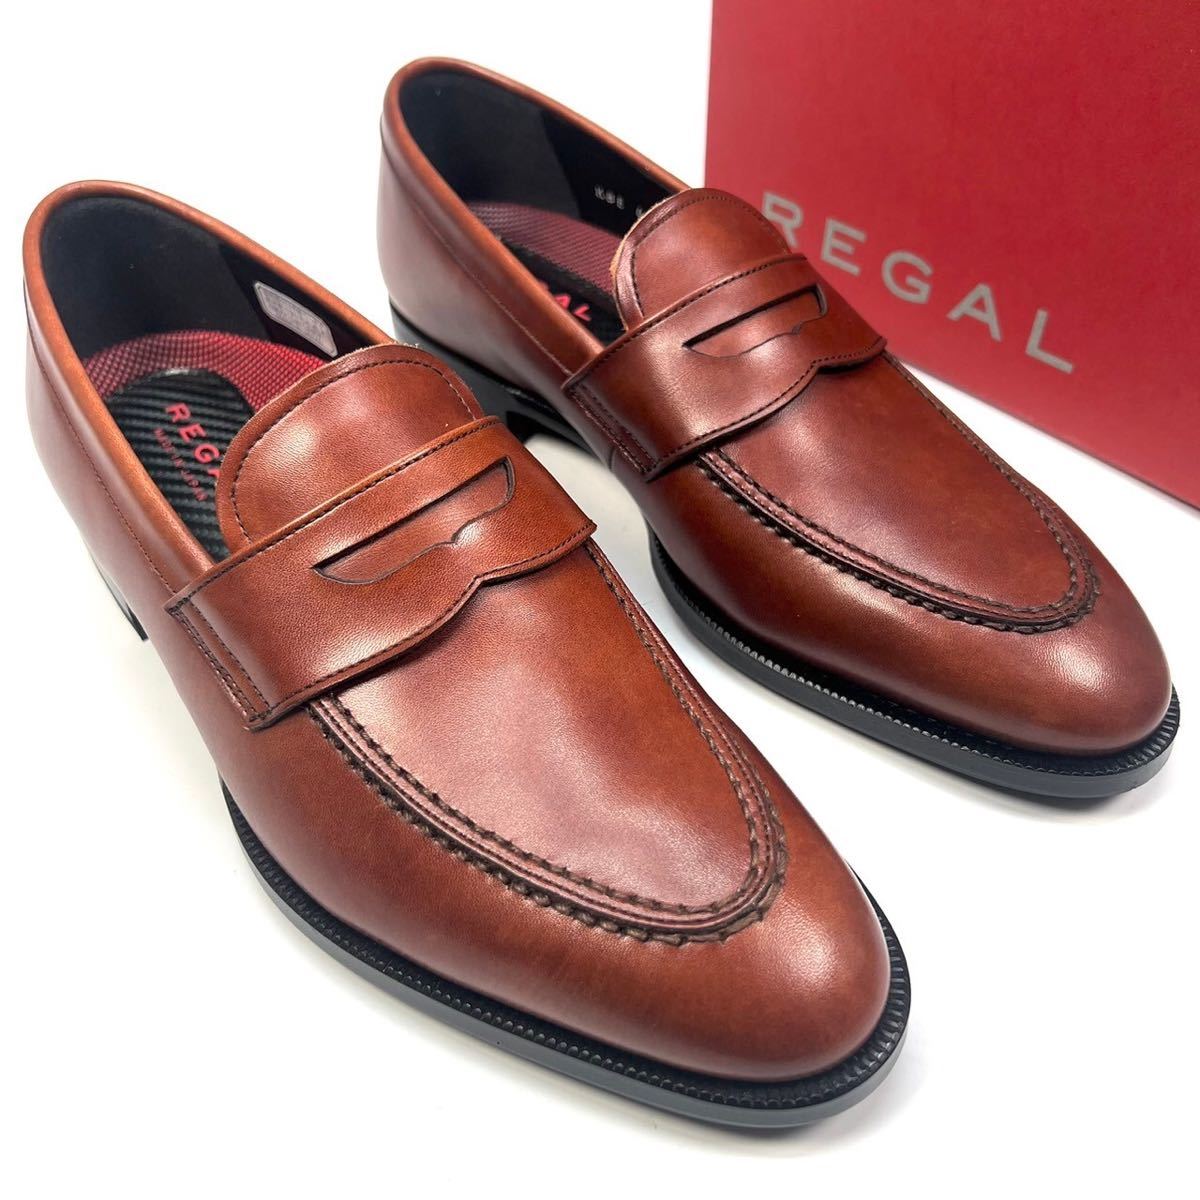 REGAL ローファー 靴 革靴 24.5cm - ローファー